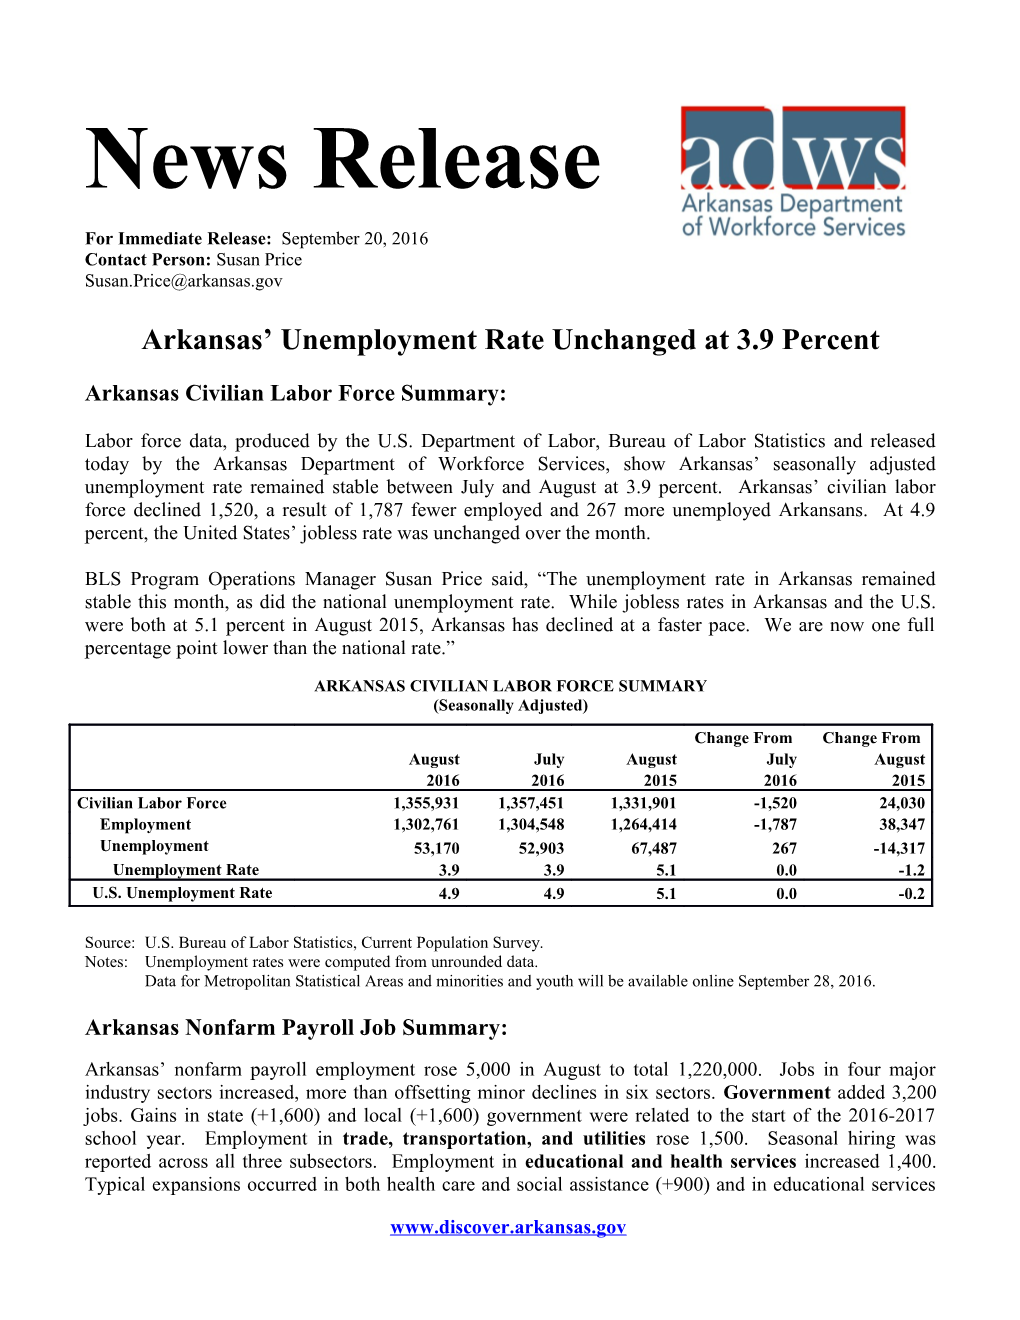 Arkansas Unemployment Rateunchanged at 3.9 Percent